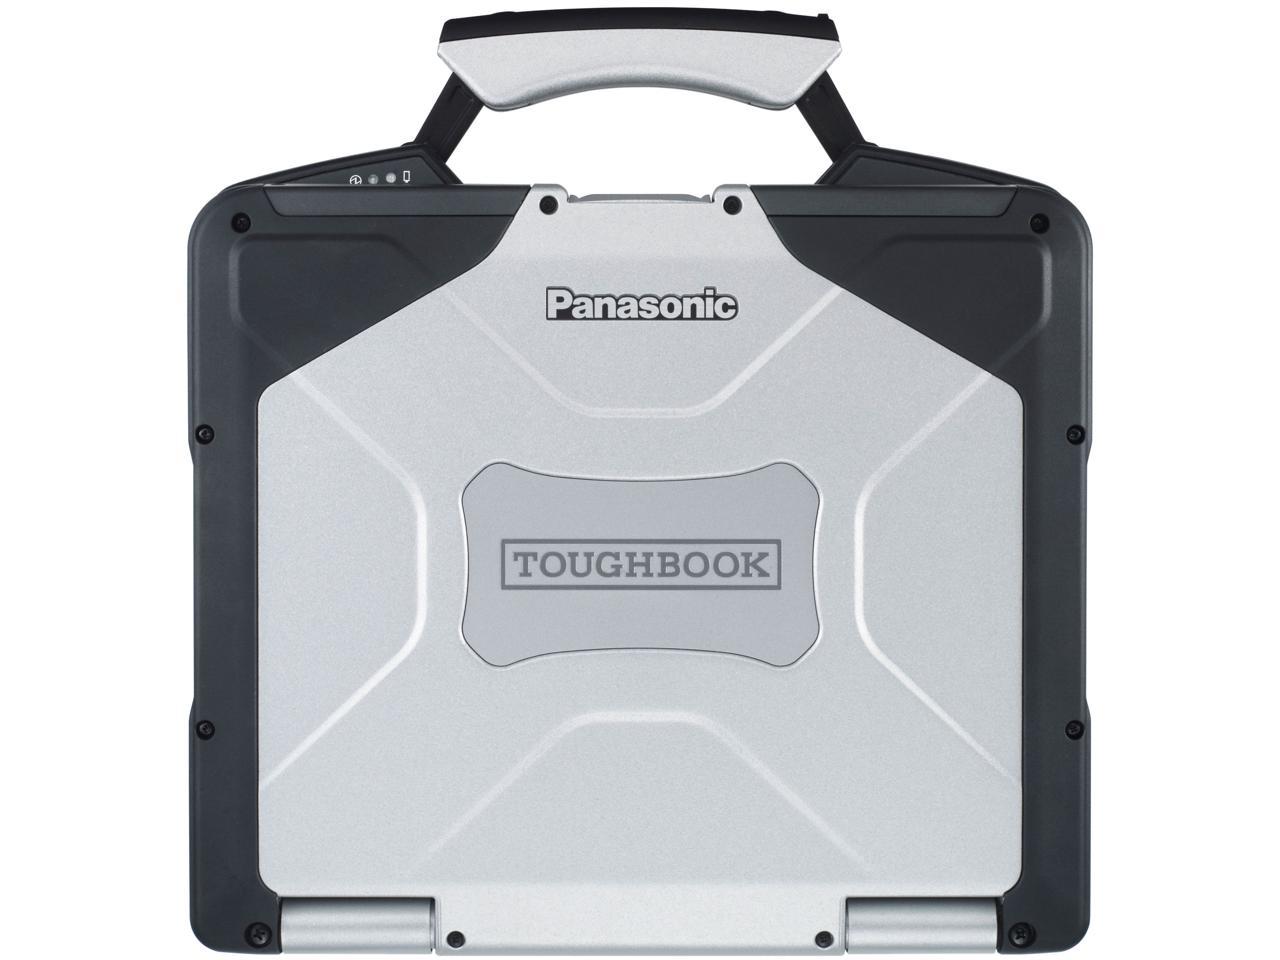 Panasonic Toughbook CF-31 MK3, Fully Rugged Laptop, 13.1